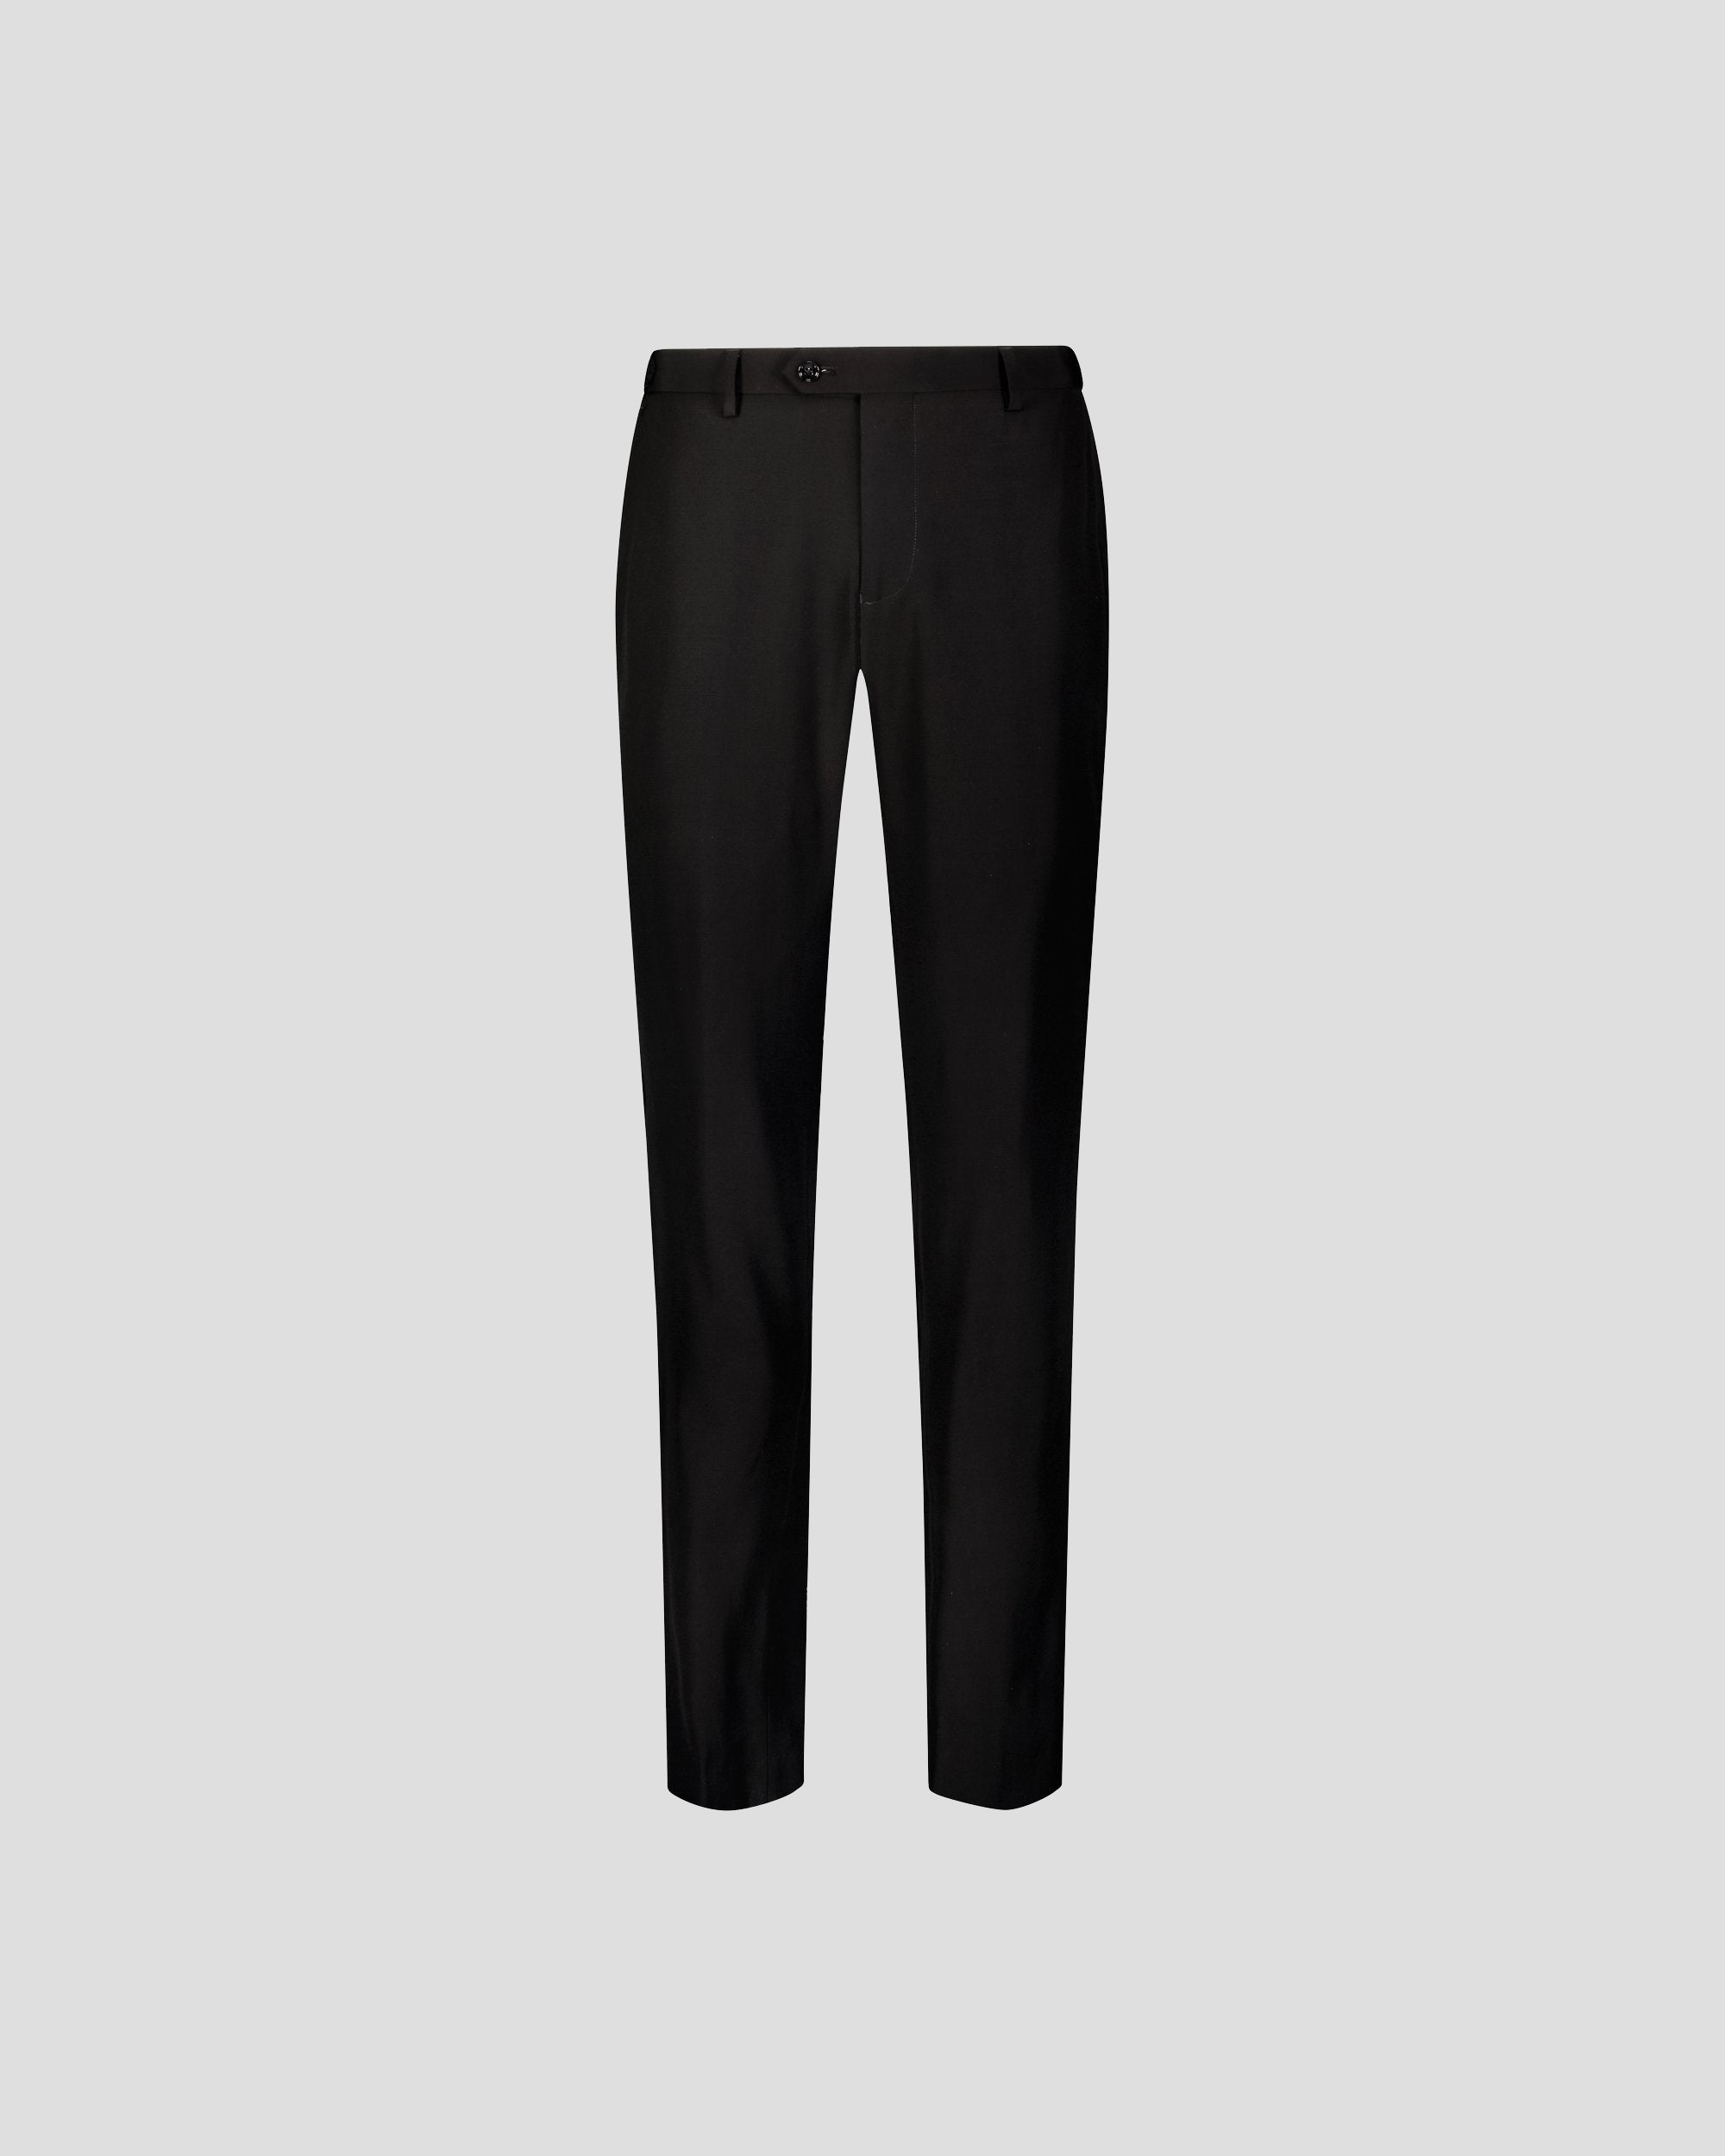 Jean-Paul GAULTIER FEMME Beltless Stretch Pants (Trousers) Black 40 |  PLAYFUL